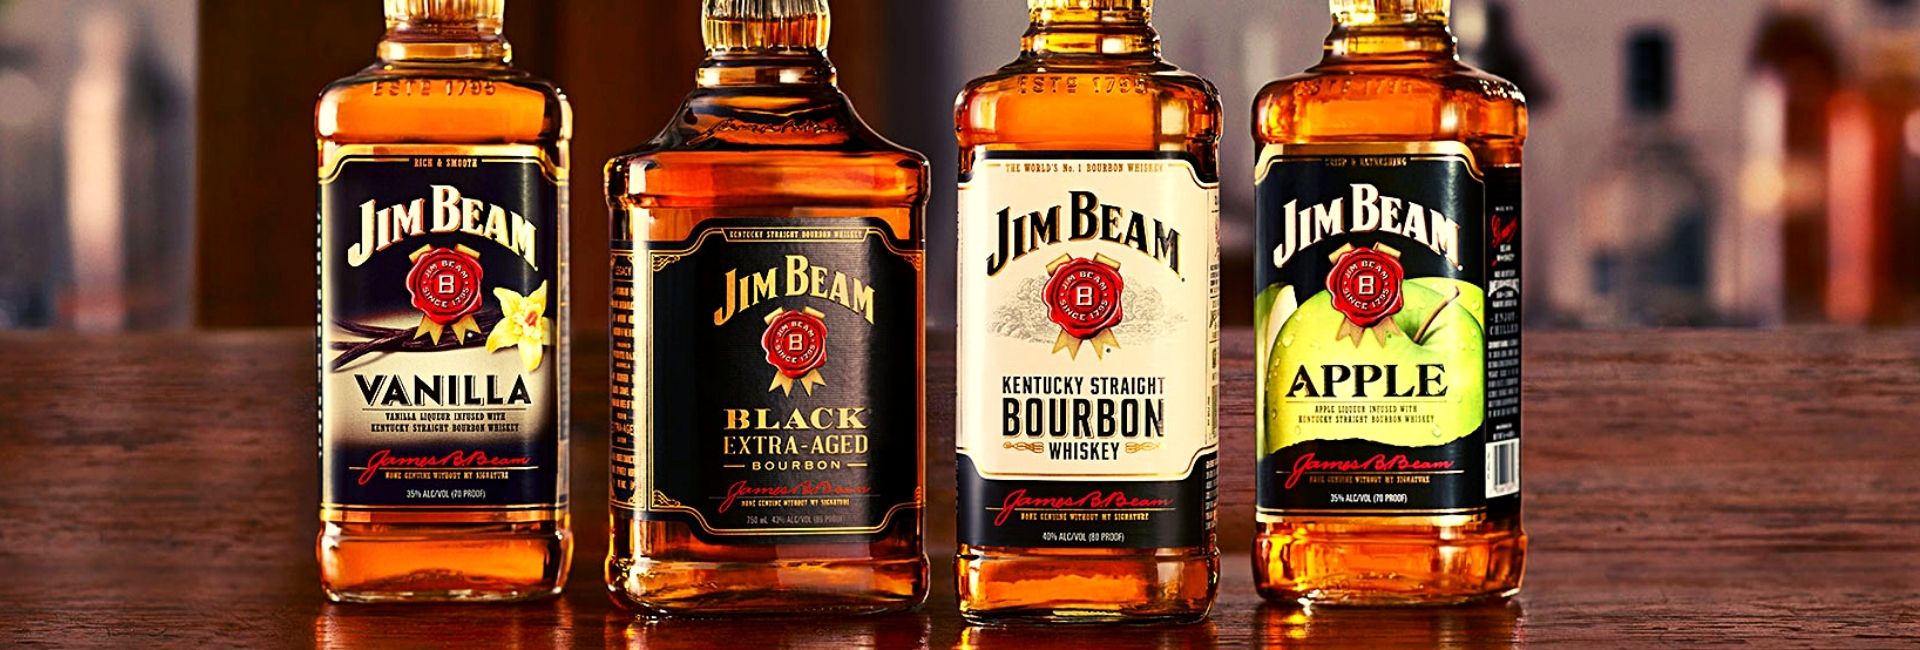 Jim Beam Bourbon Review